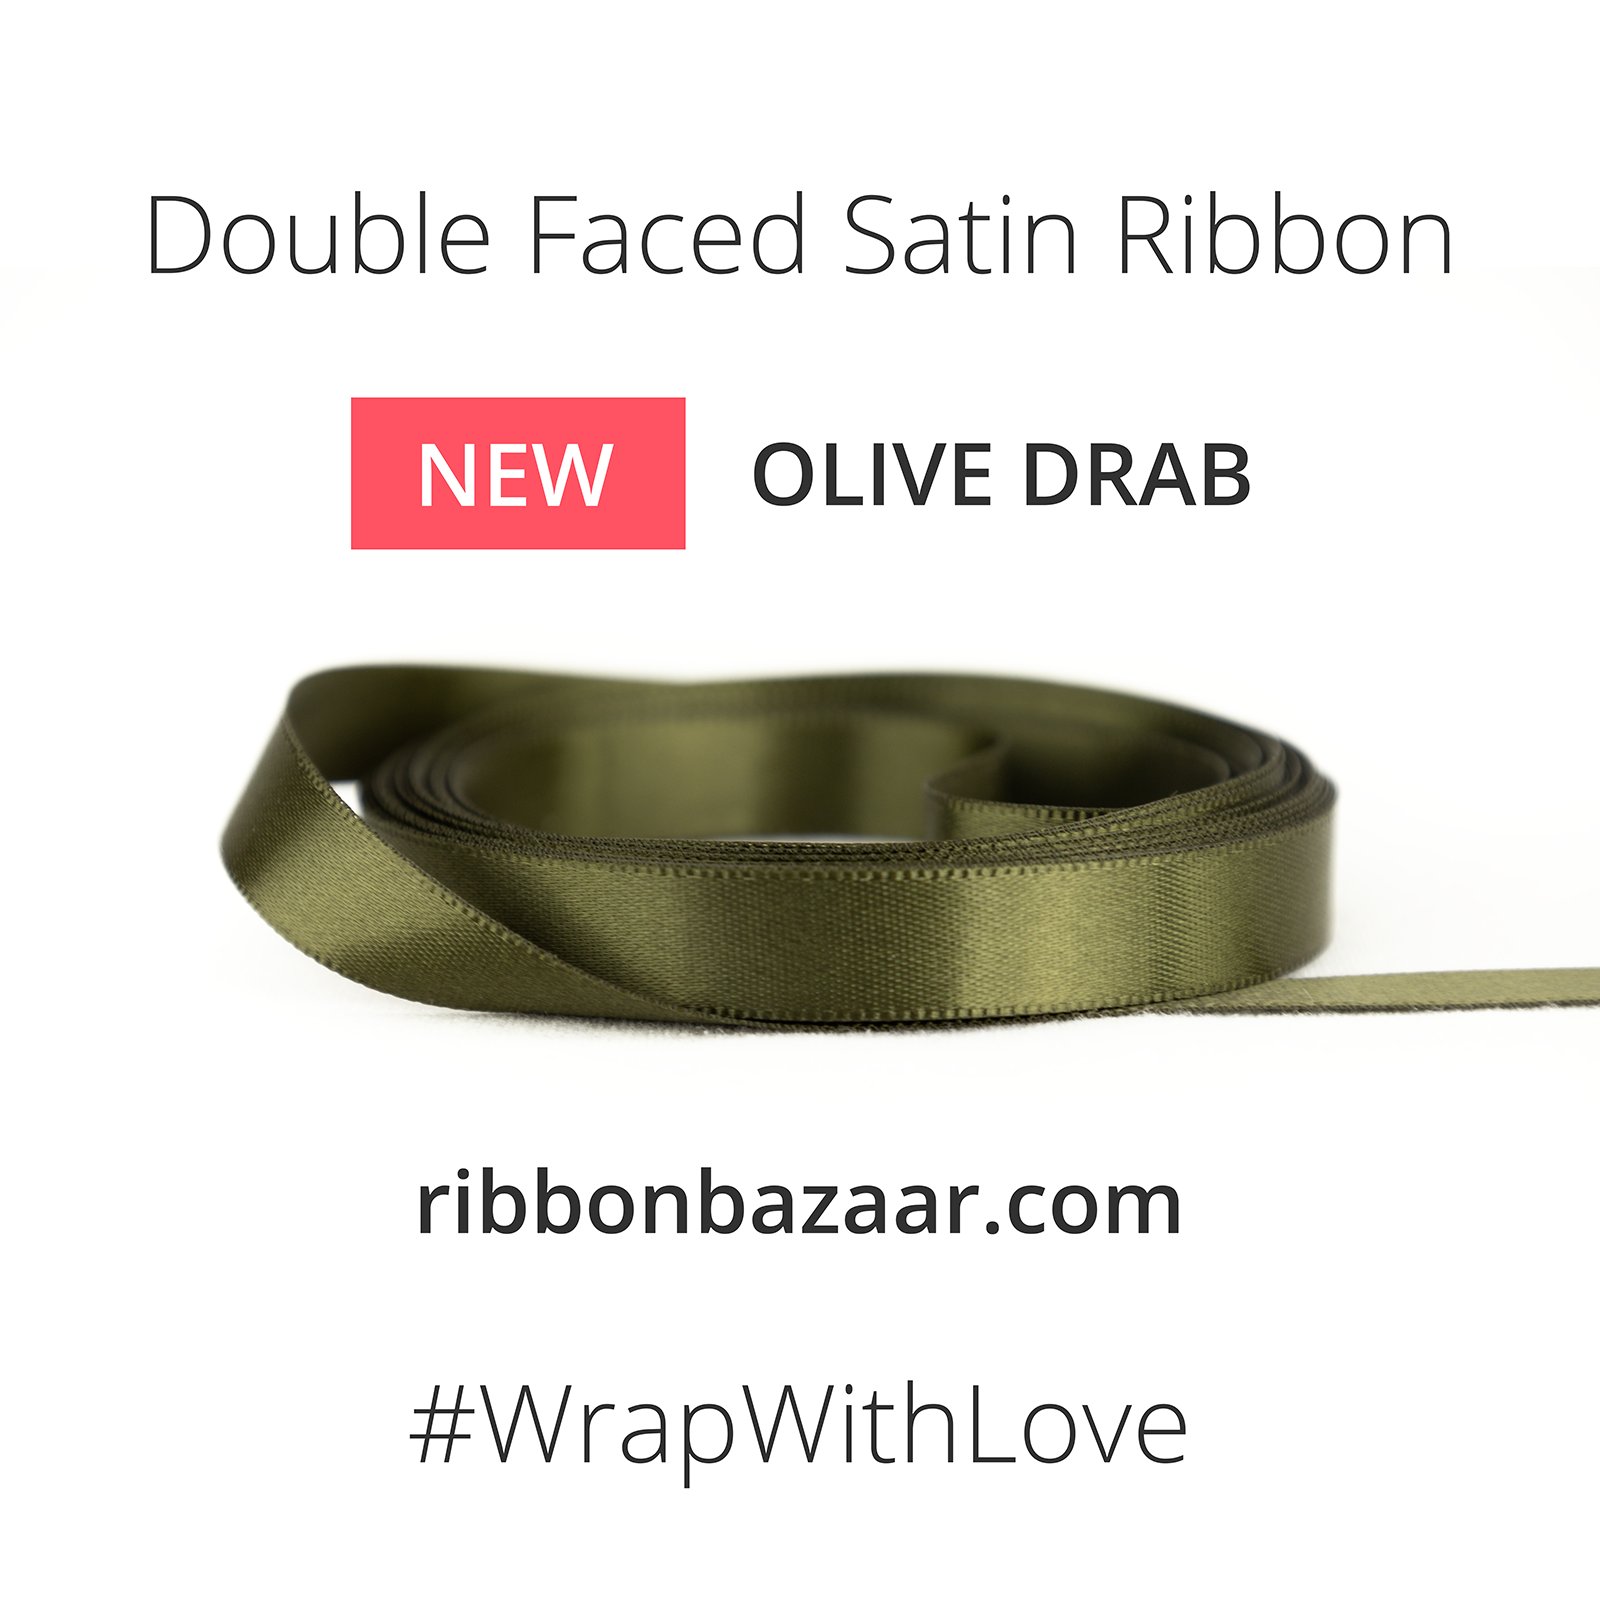 RibbonBazaar.com